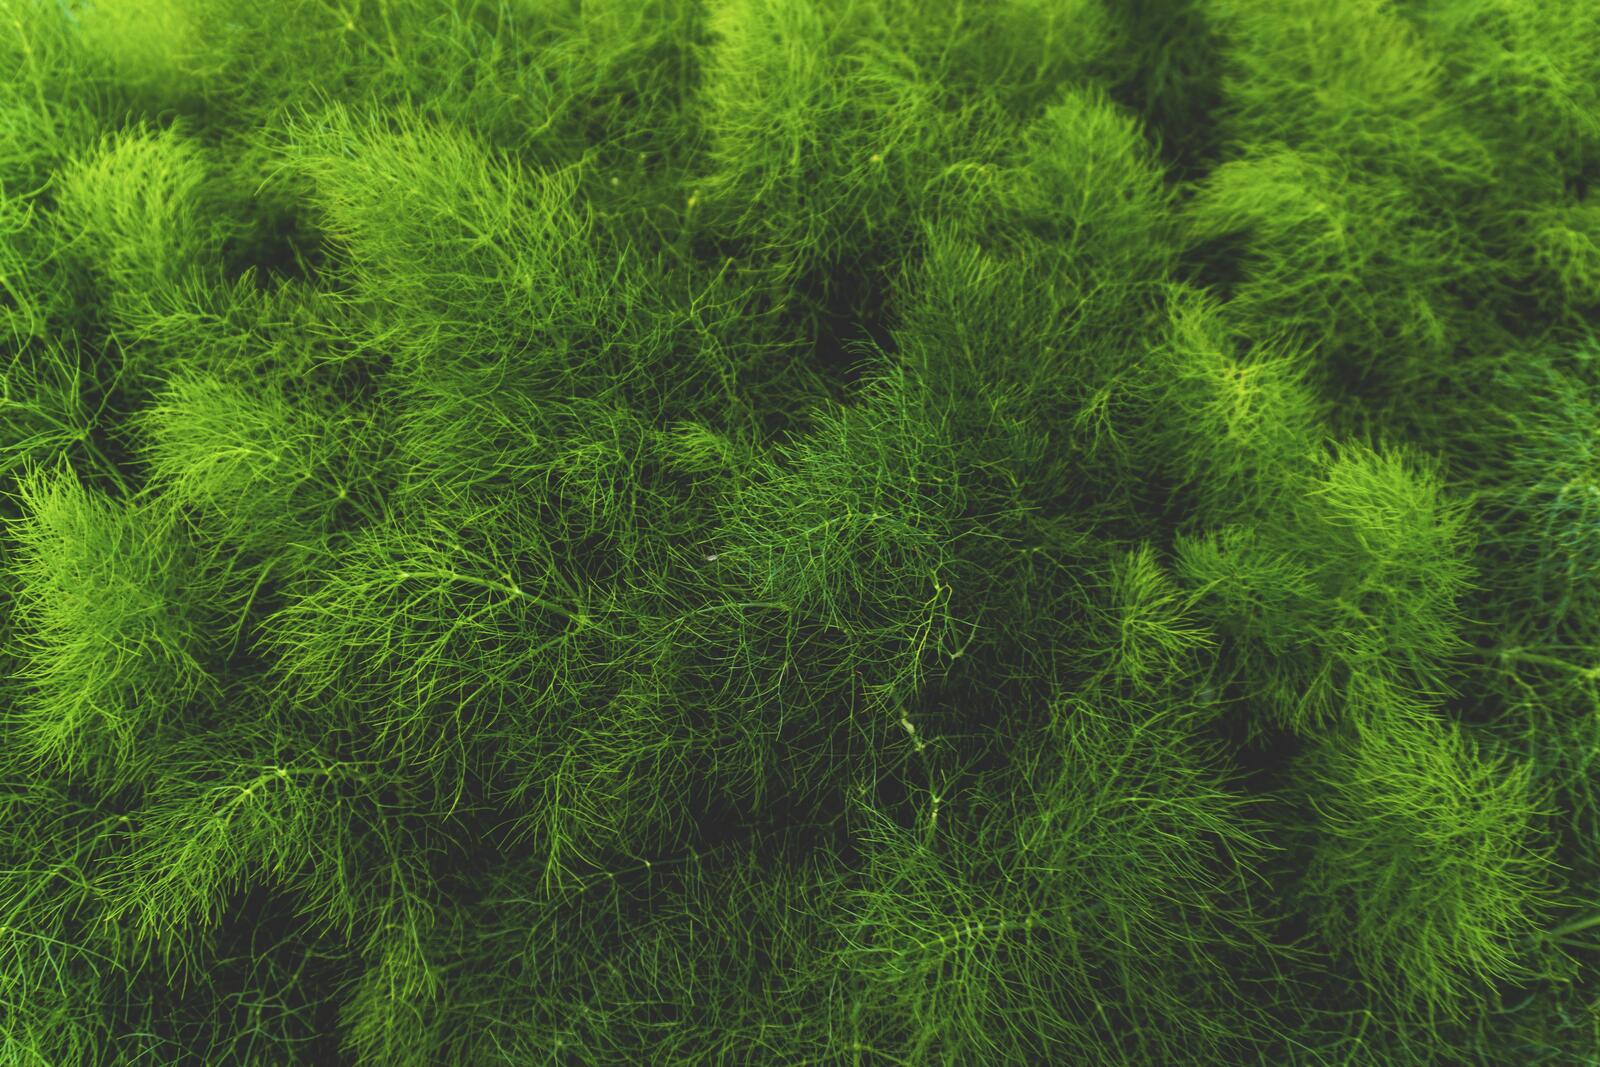 Wallpapers wallpaper grass plants textures on the desktop